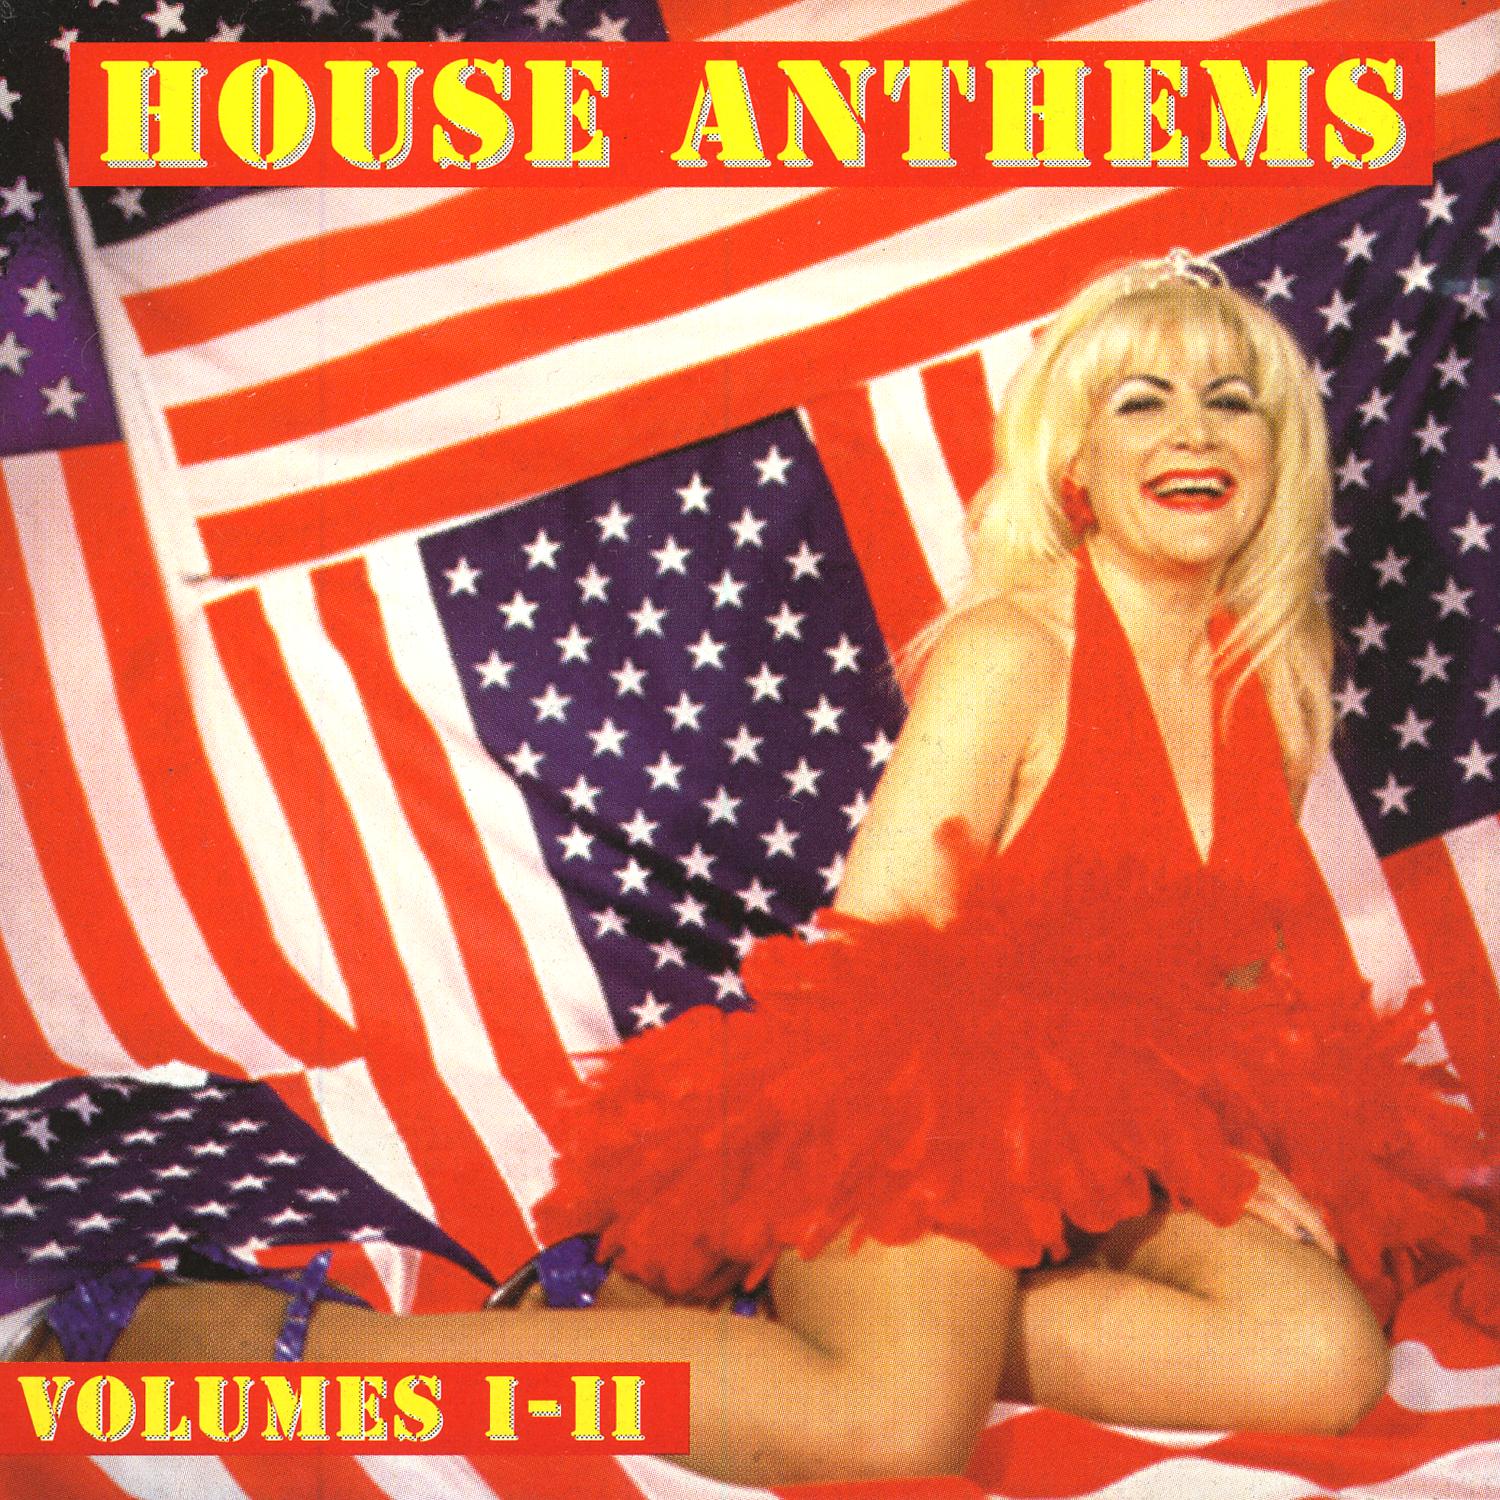 House Anthems Volumes I-II